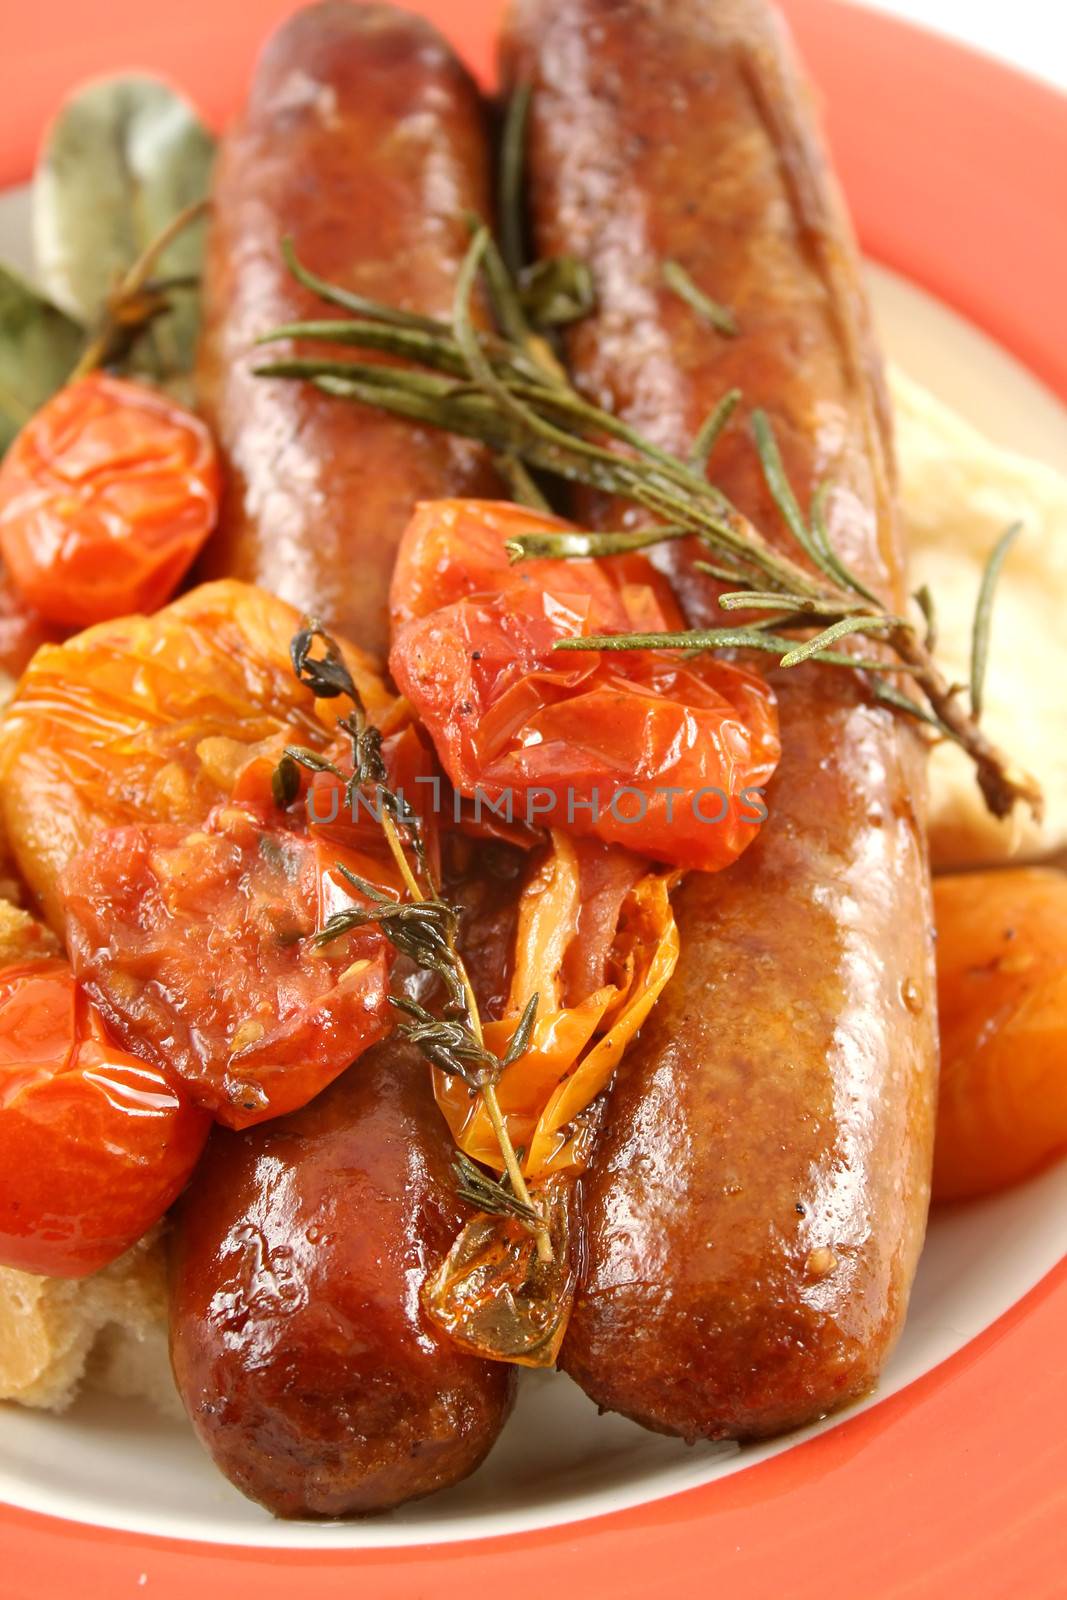 Sausage And Tomato Bake by jabiru